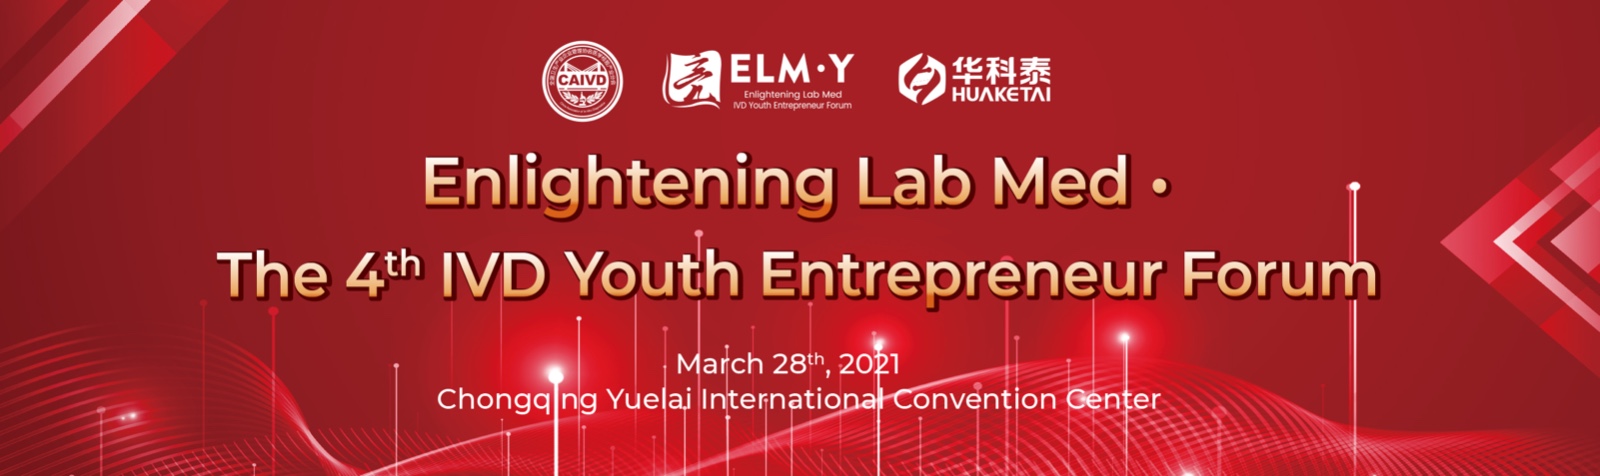 Enlightening Lab MedThe 4th Youth Entrepreneur Forum